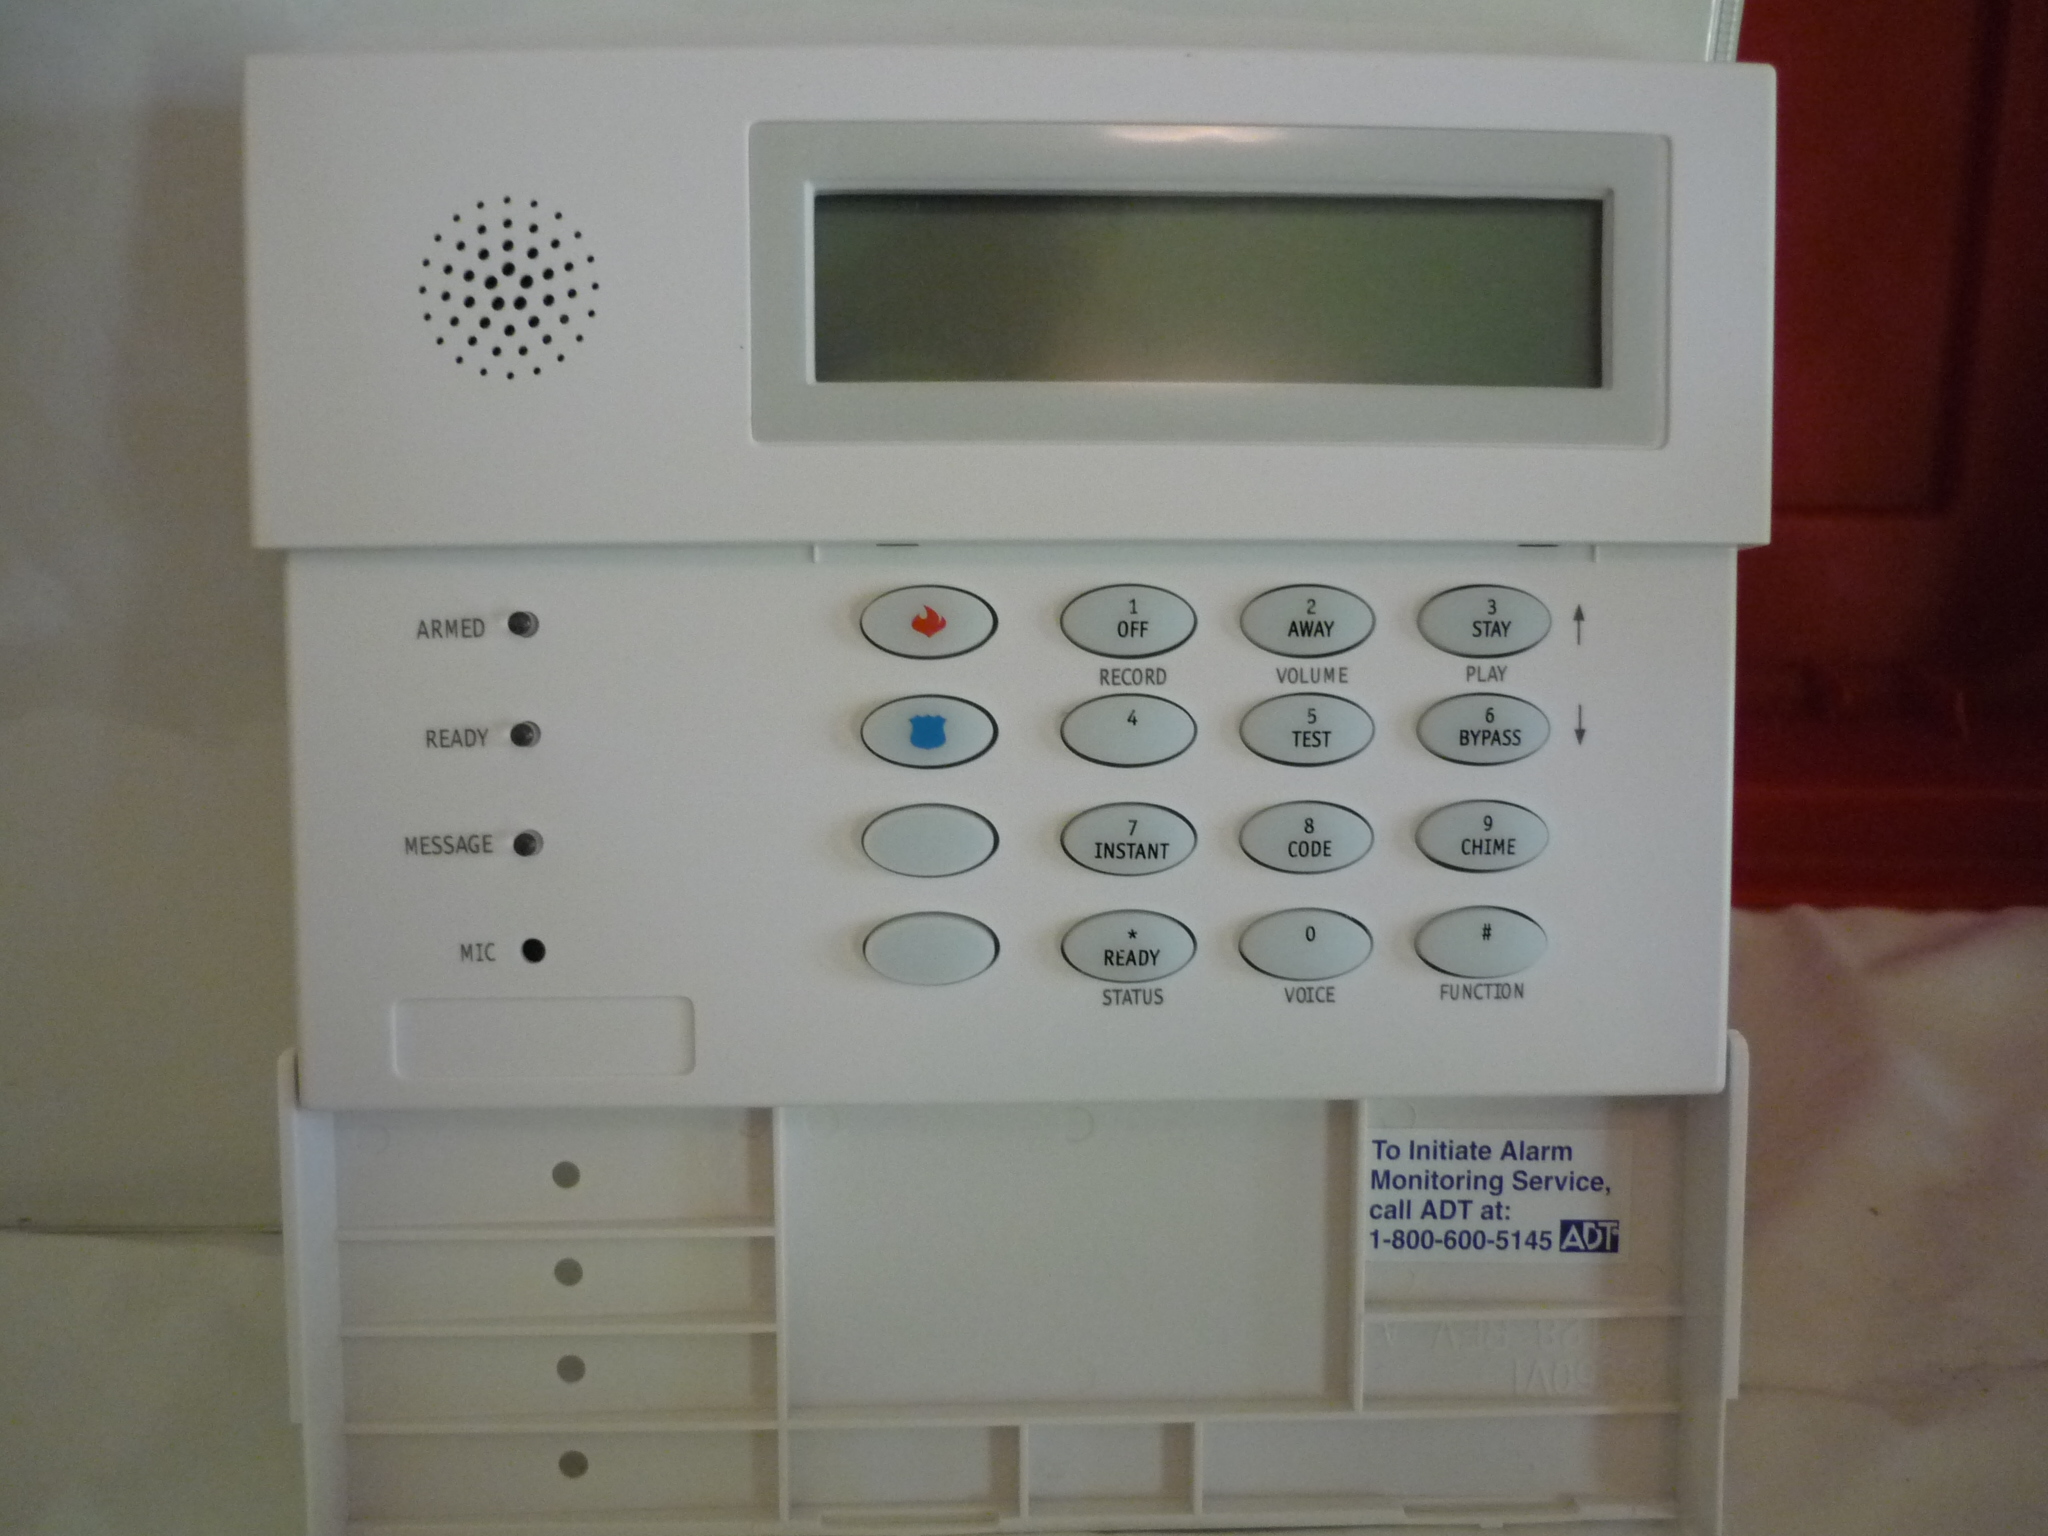 adt control panel key